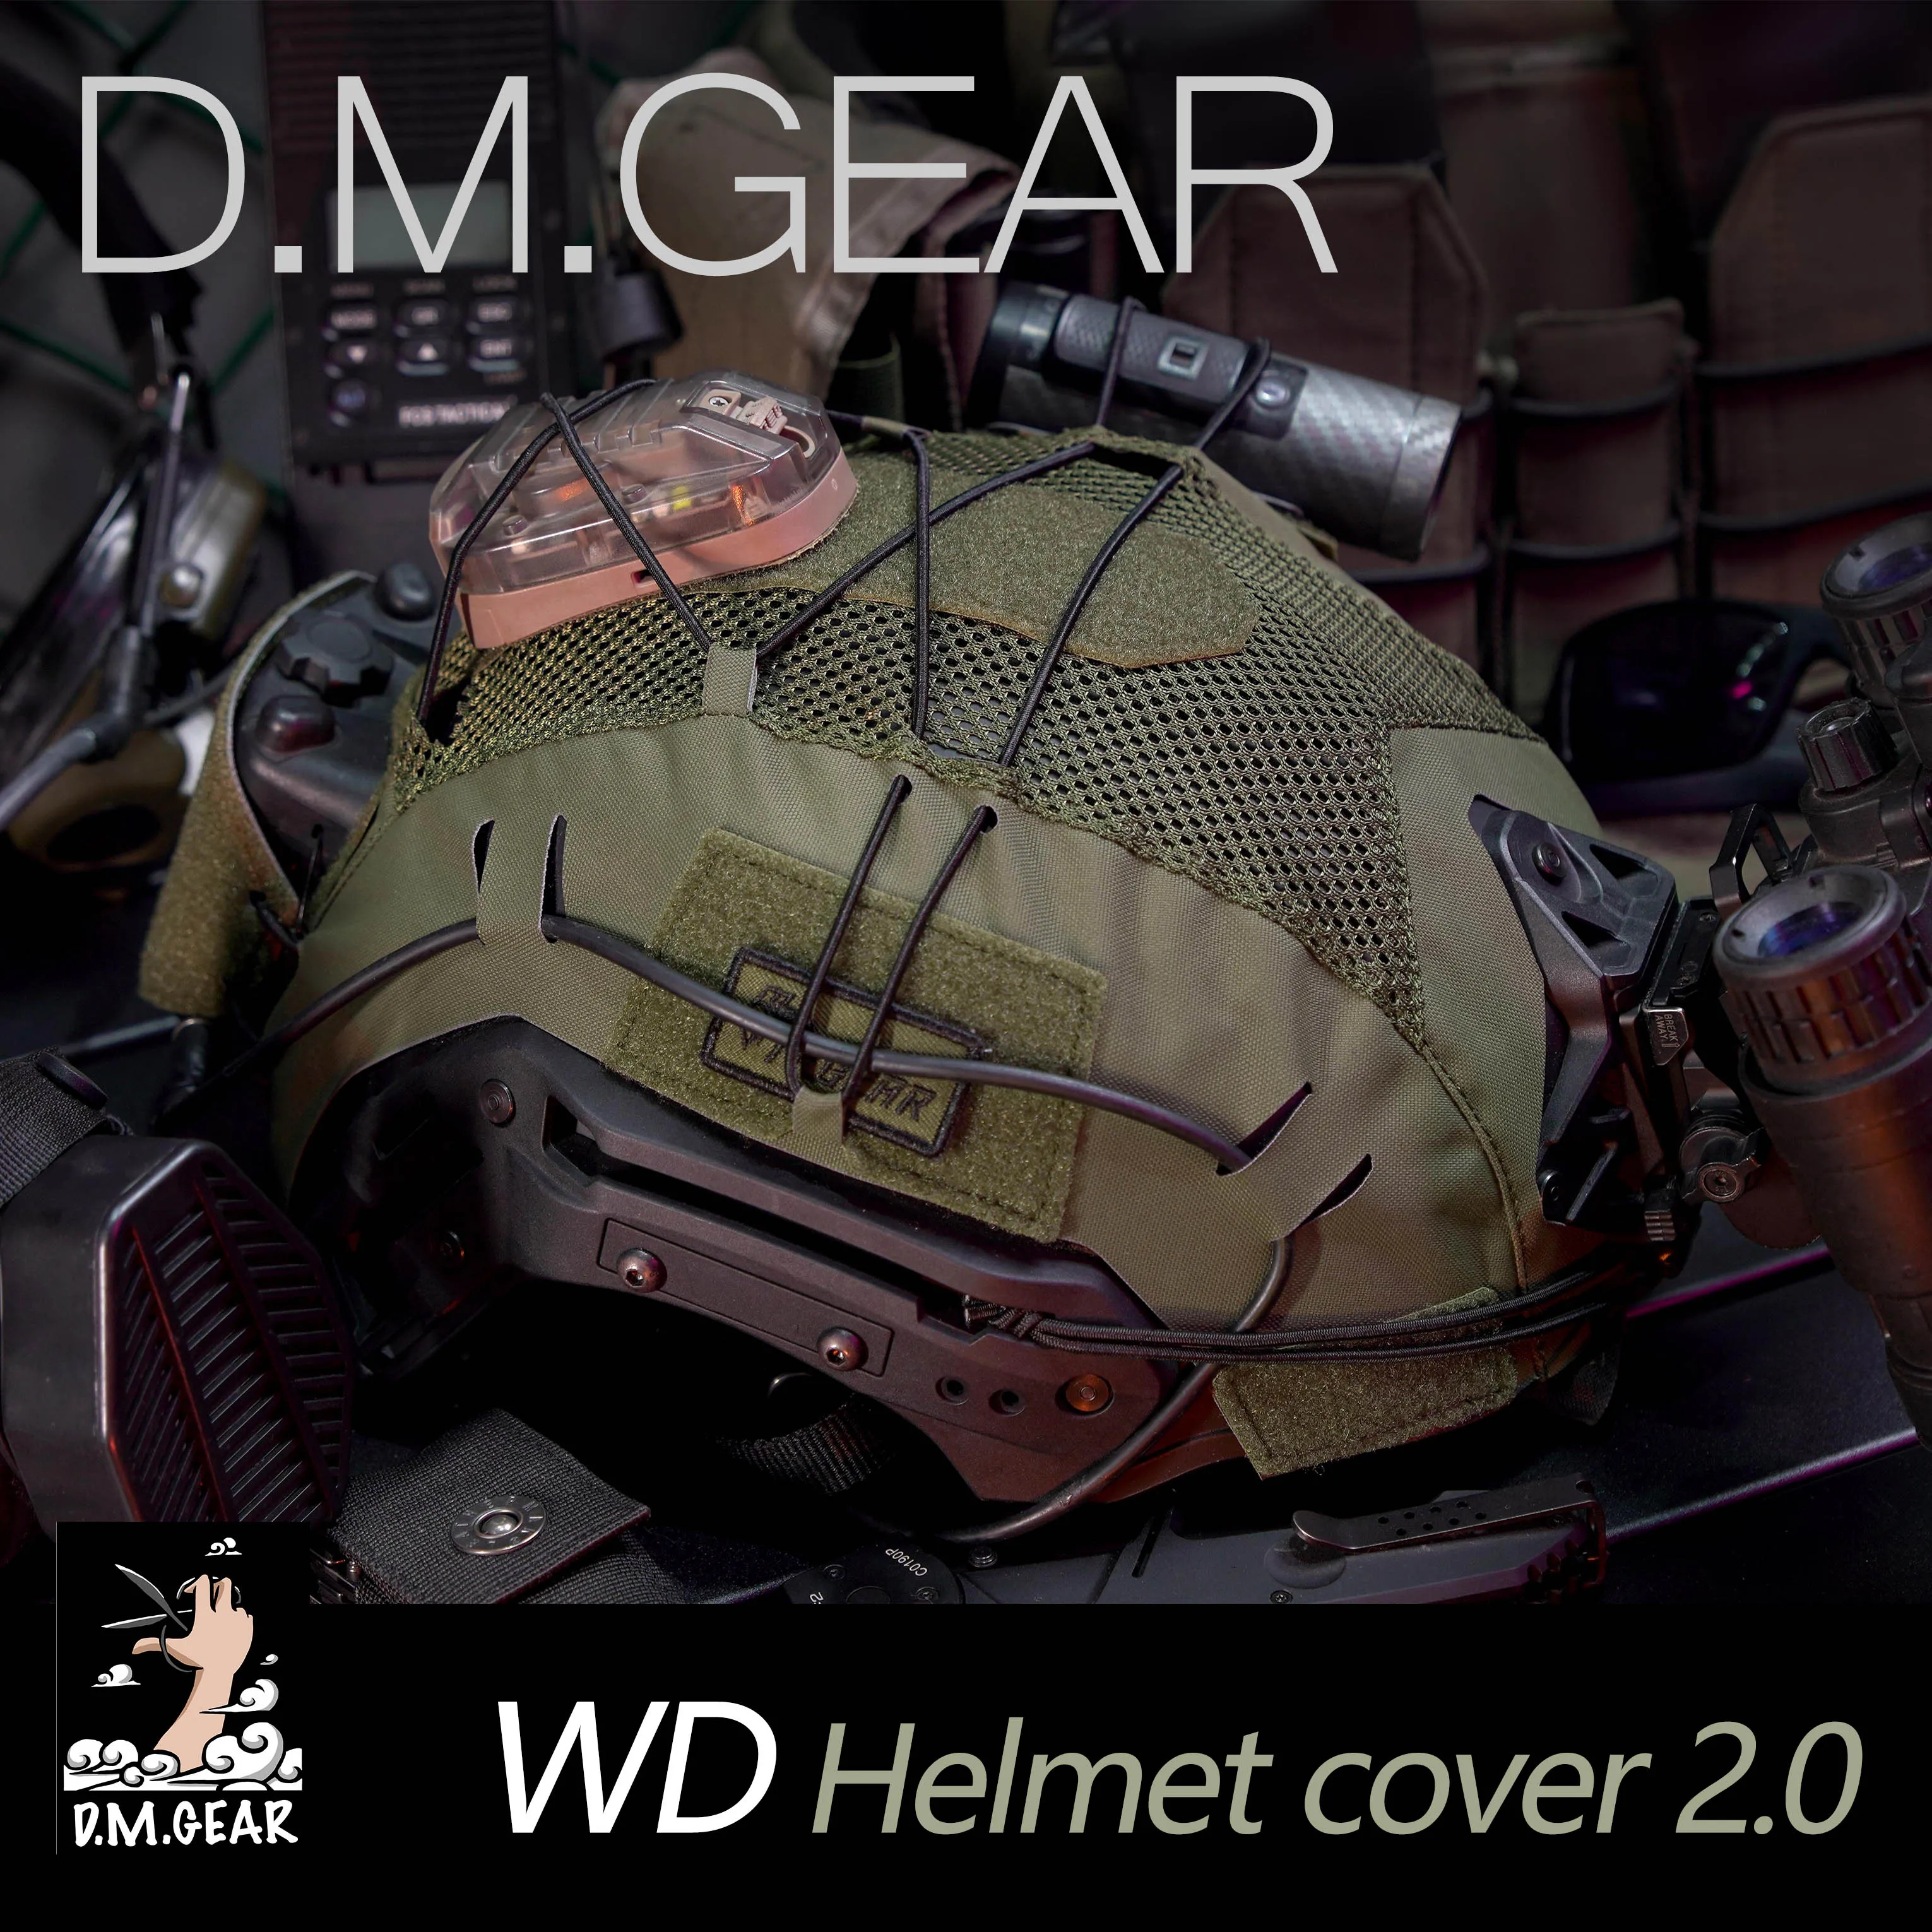 

DMGear Maritime Helmet Cover Wendy 2 Tactical Mesh Helmet Protective Gear Military Airsoft Hunt Equipment Multicam Ranger Green